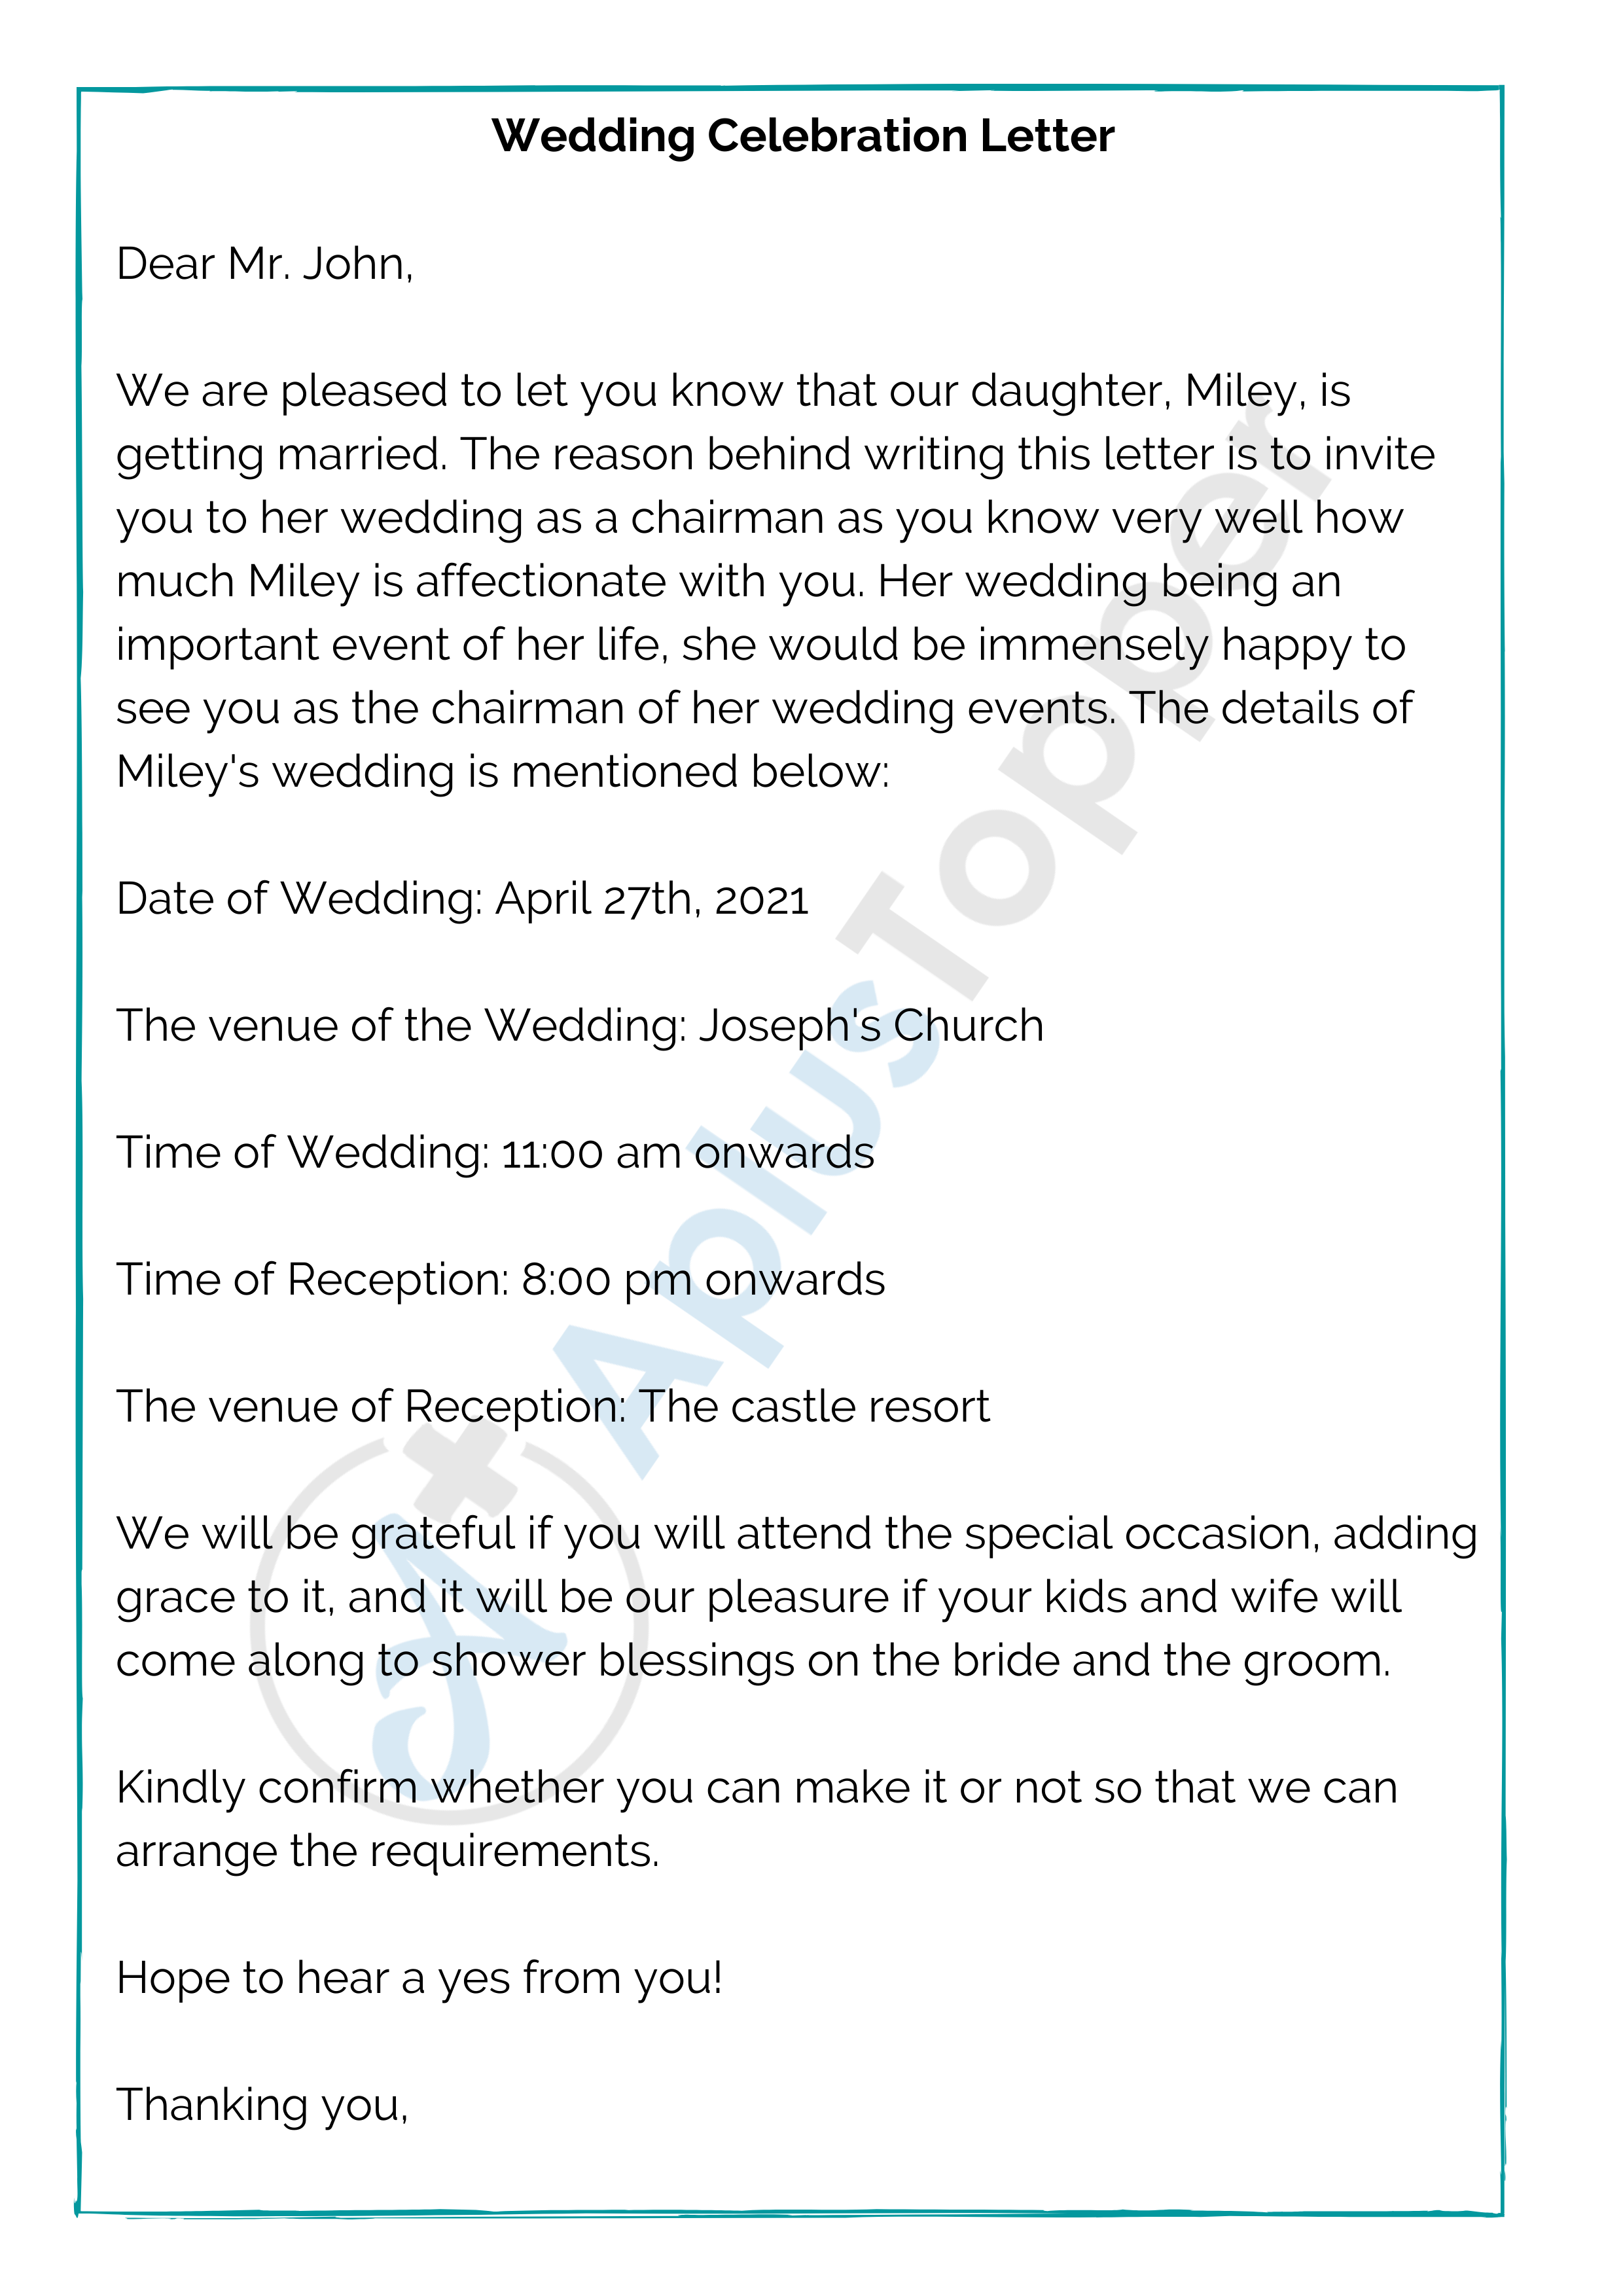 Wedding Celebration Letter